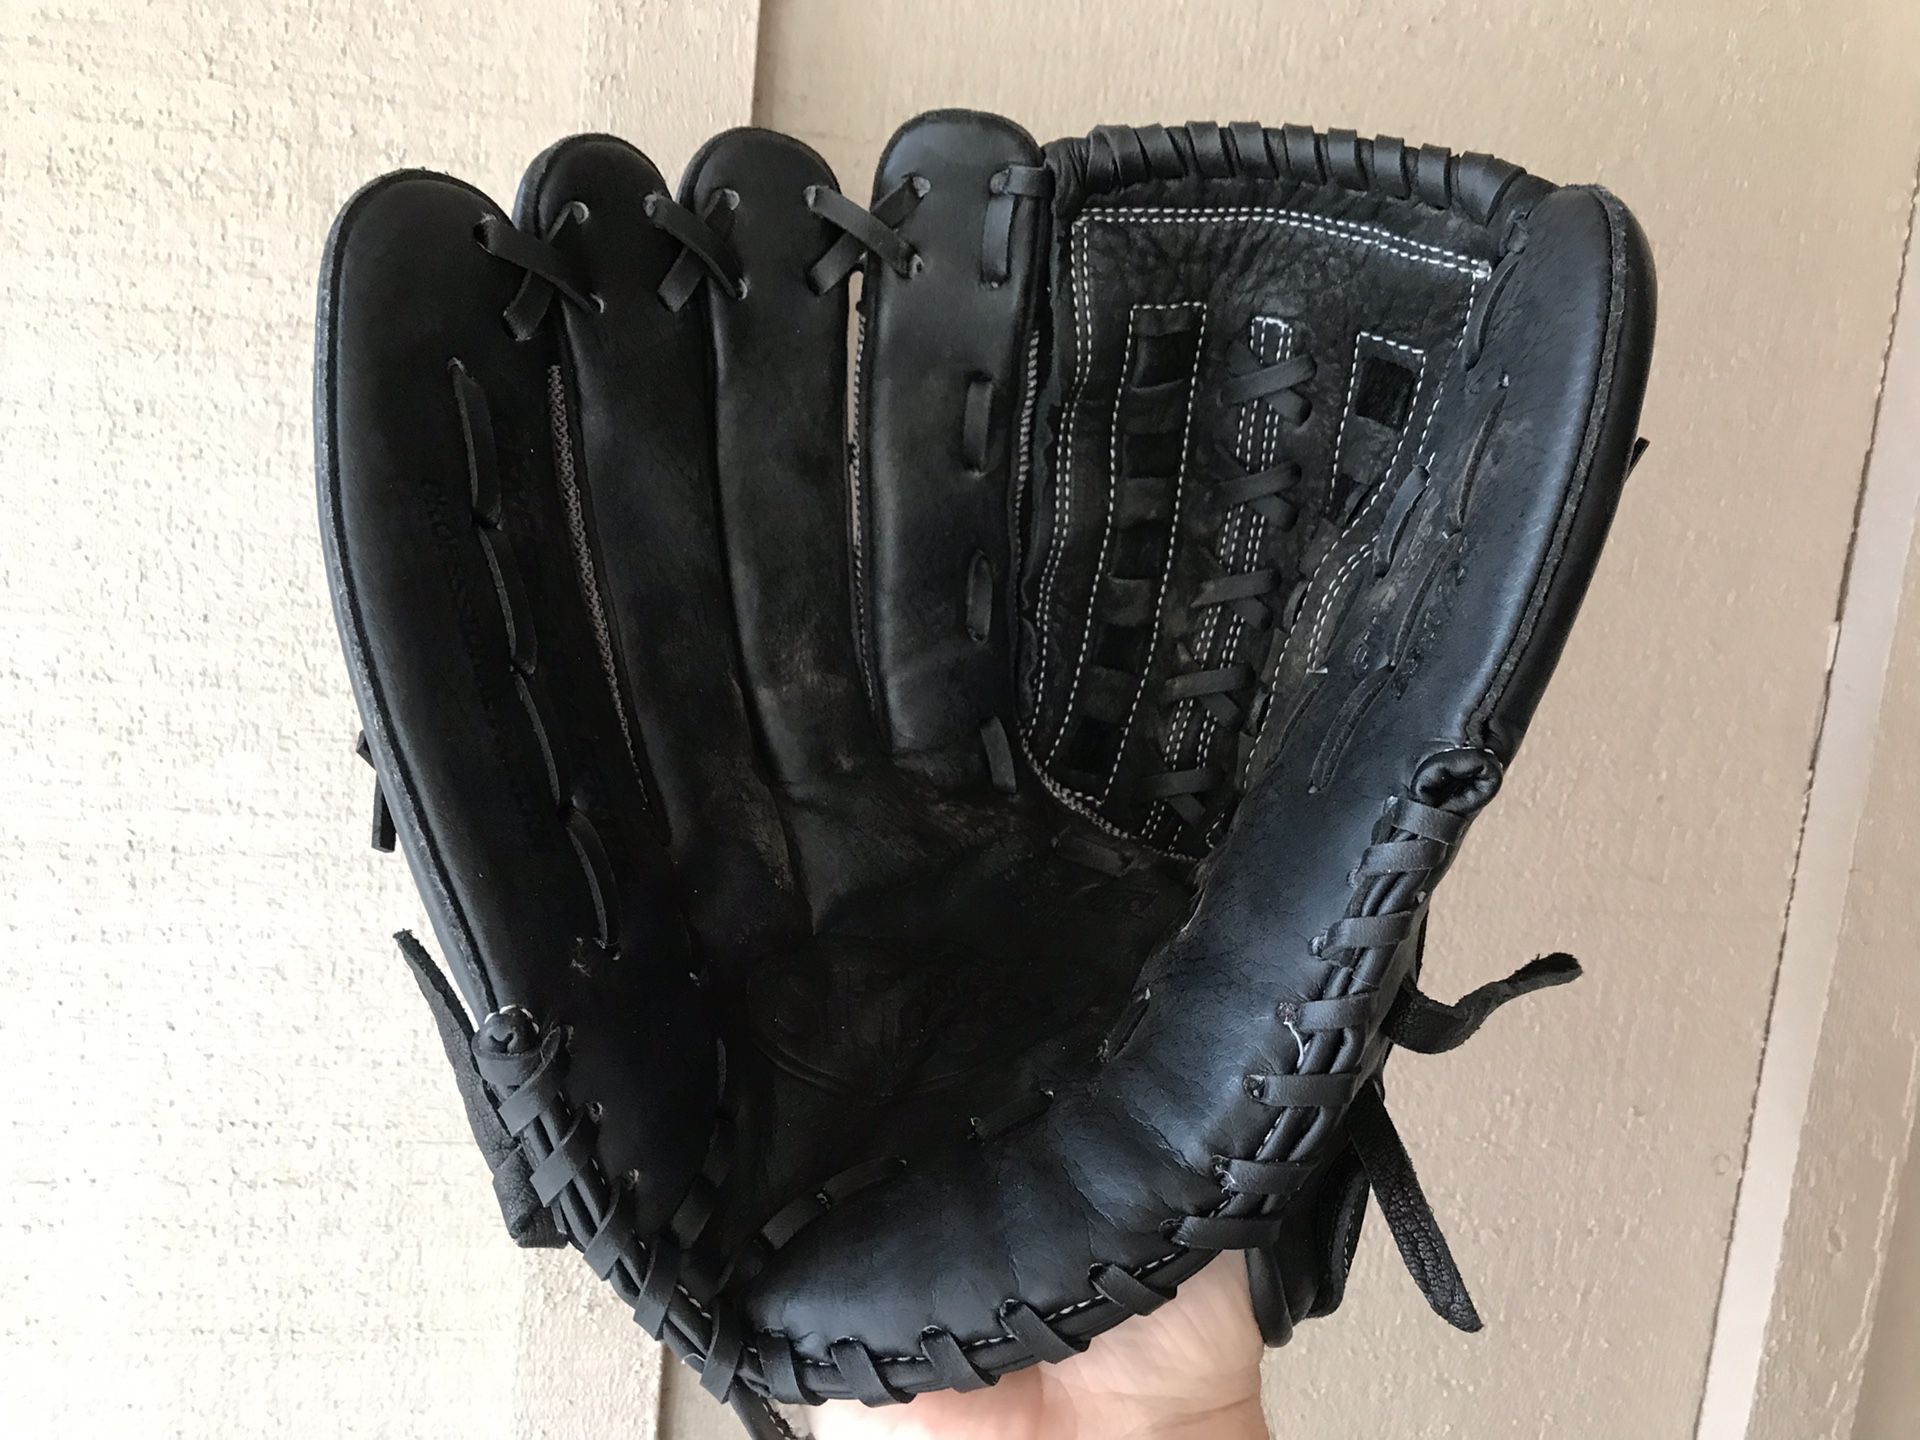 Adult LH softball glove